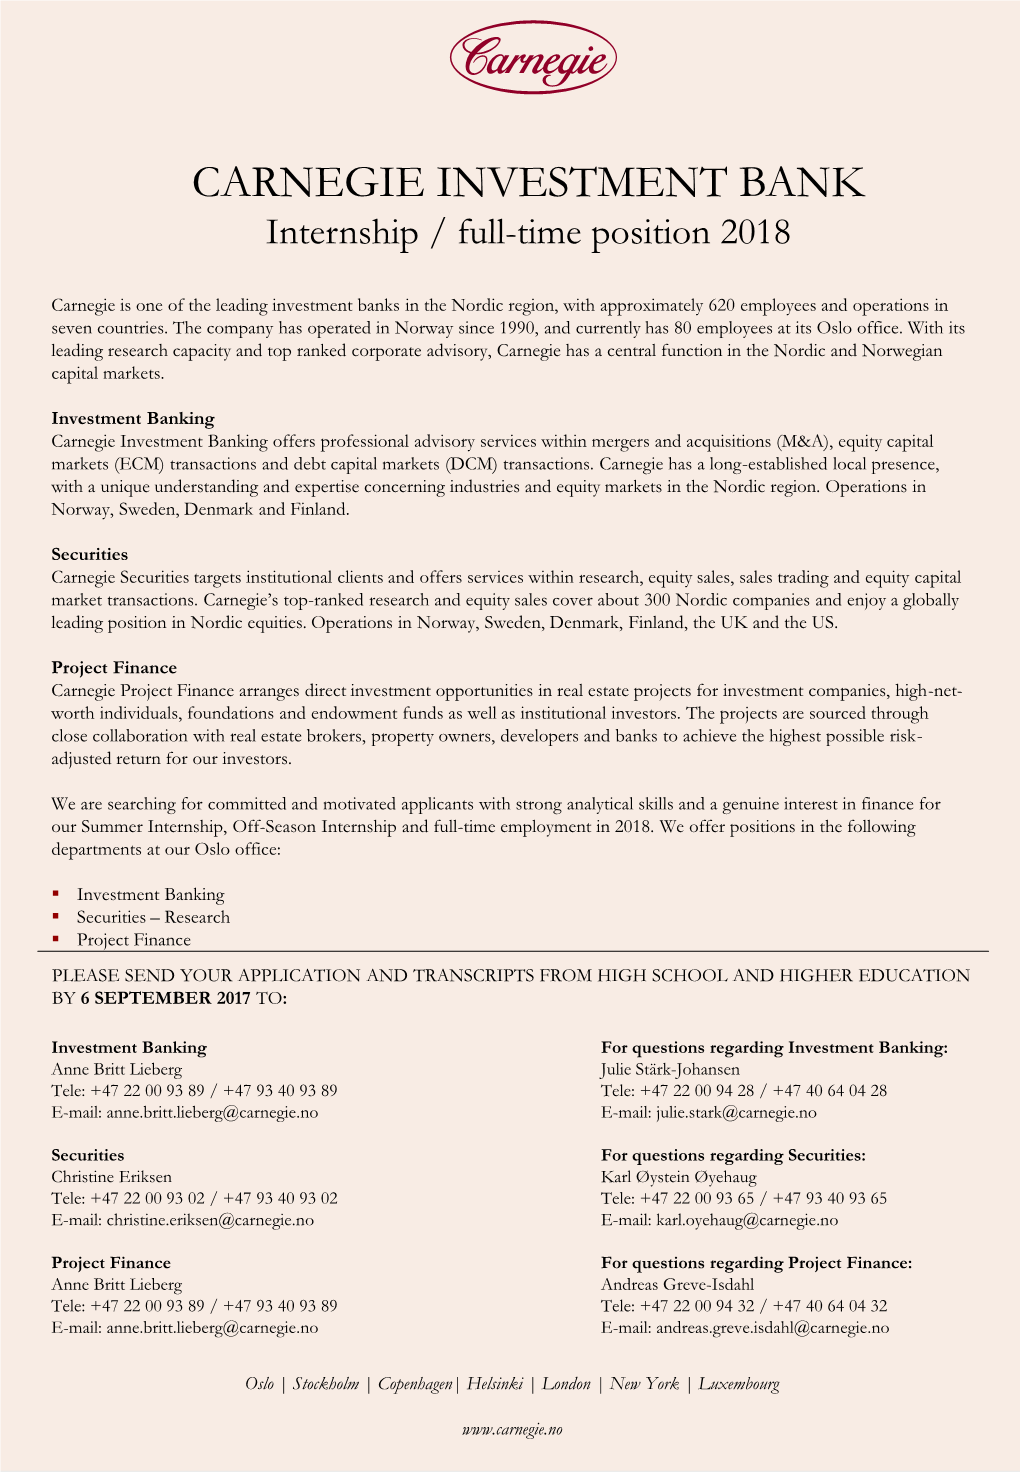 CARNEGIE INVESTMENT BANK Internship / Full-Time Position 2018